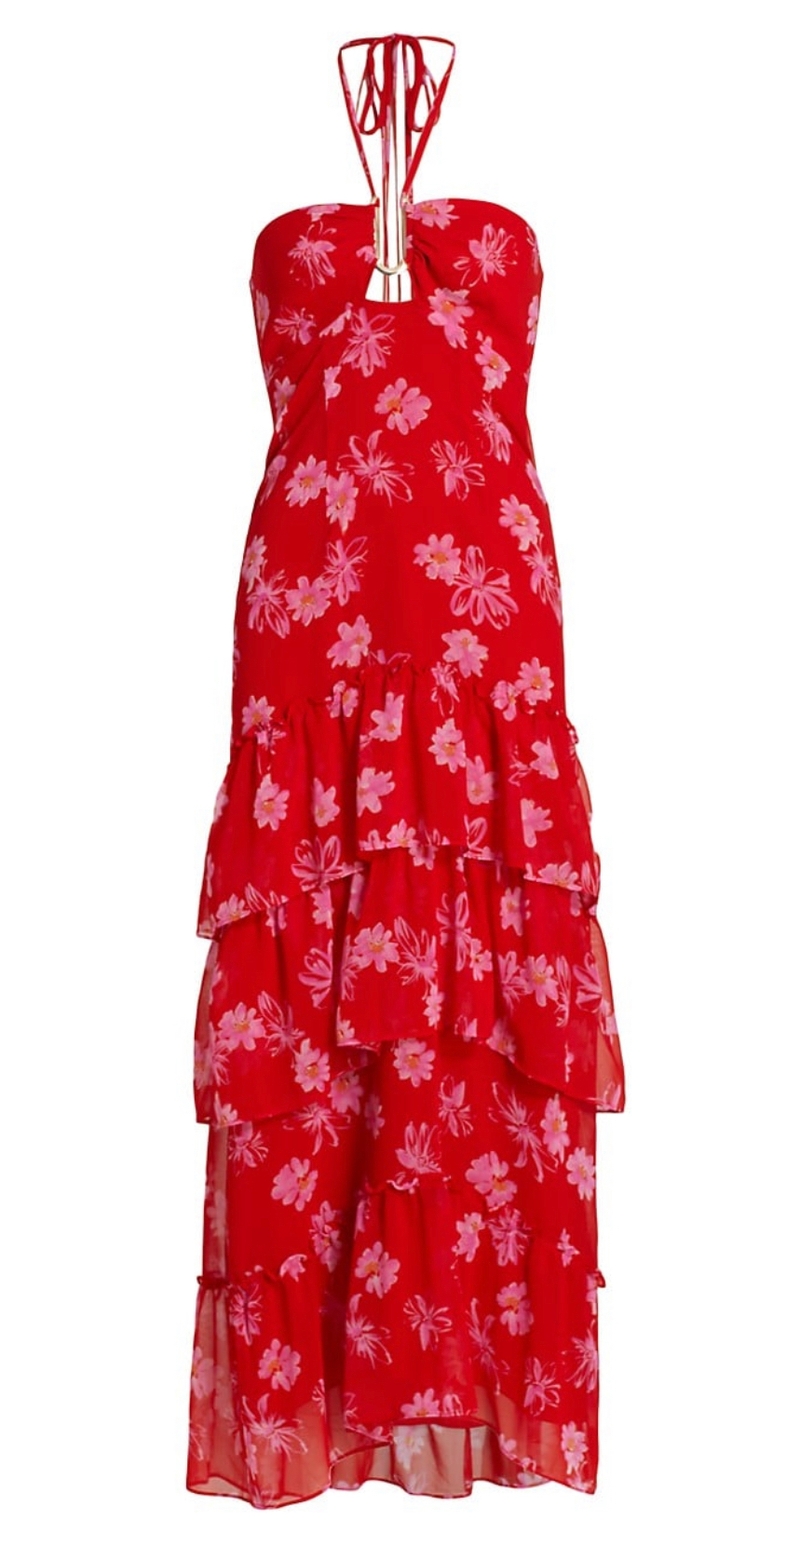 Wayf Red Floral Dress 